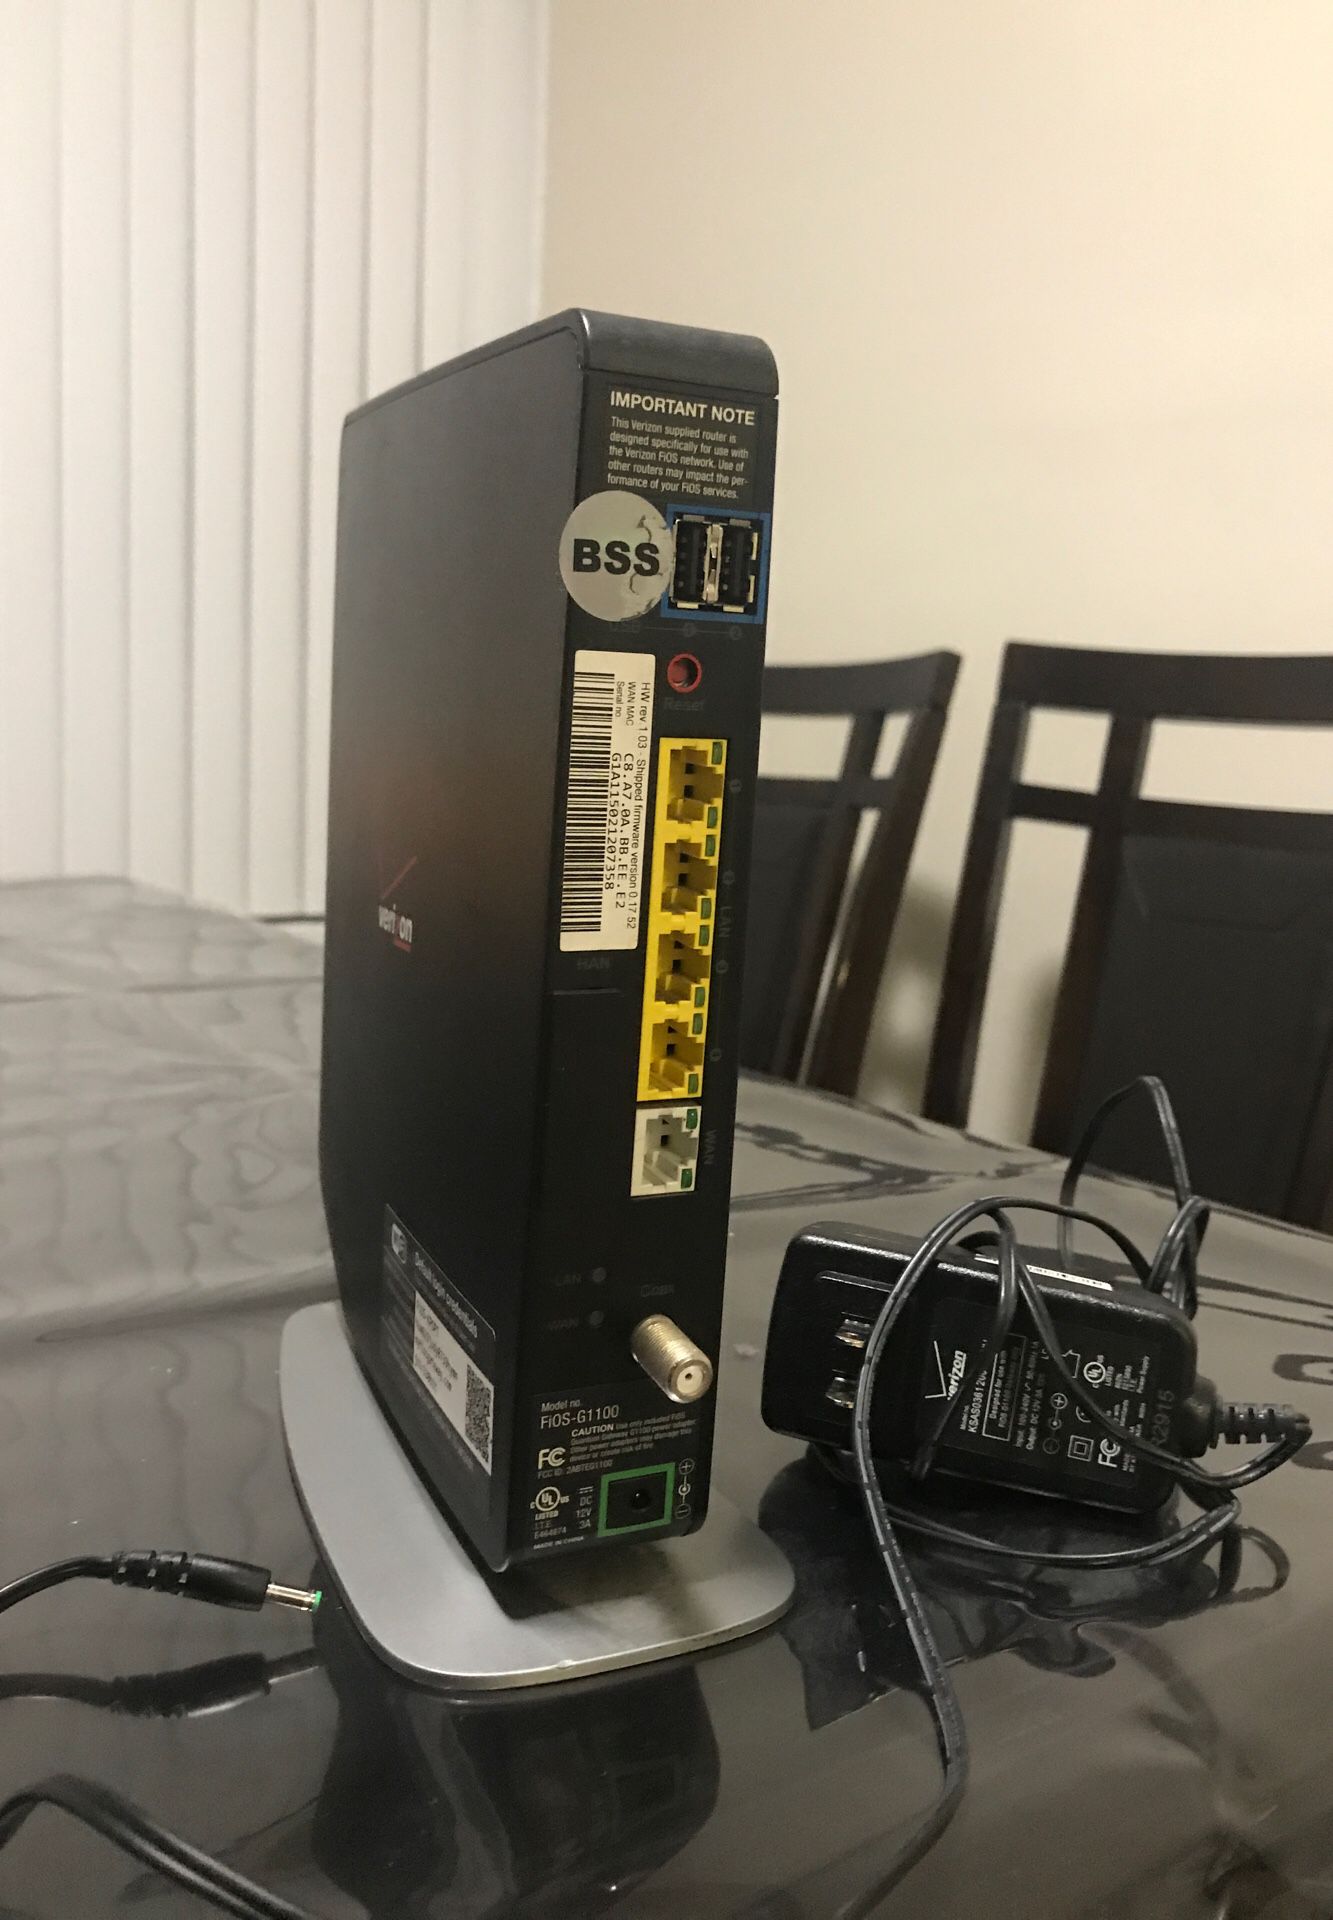 FiOS-G1100 Modem Router